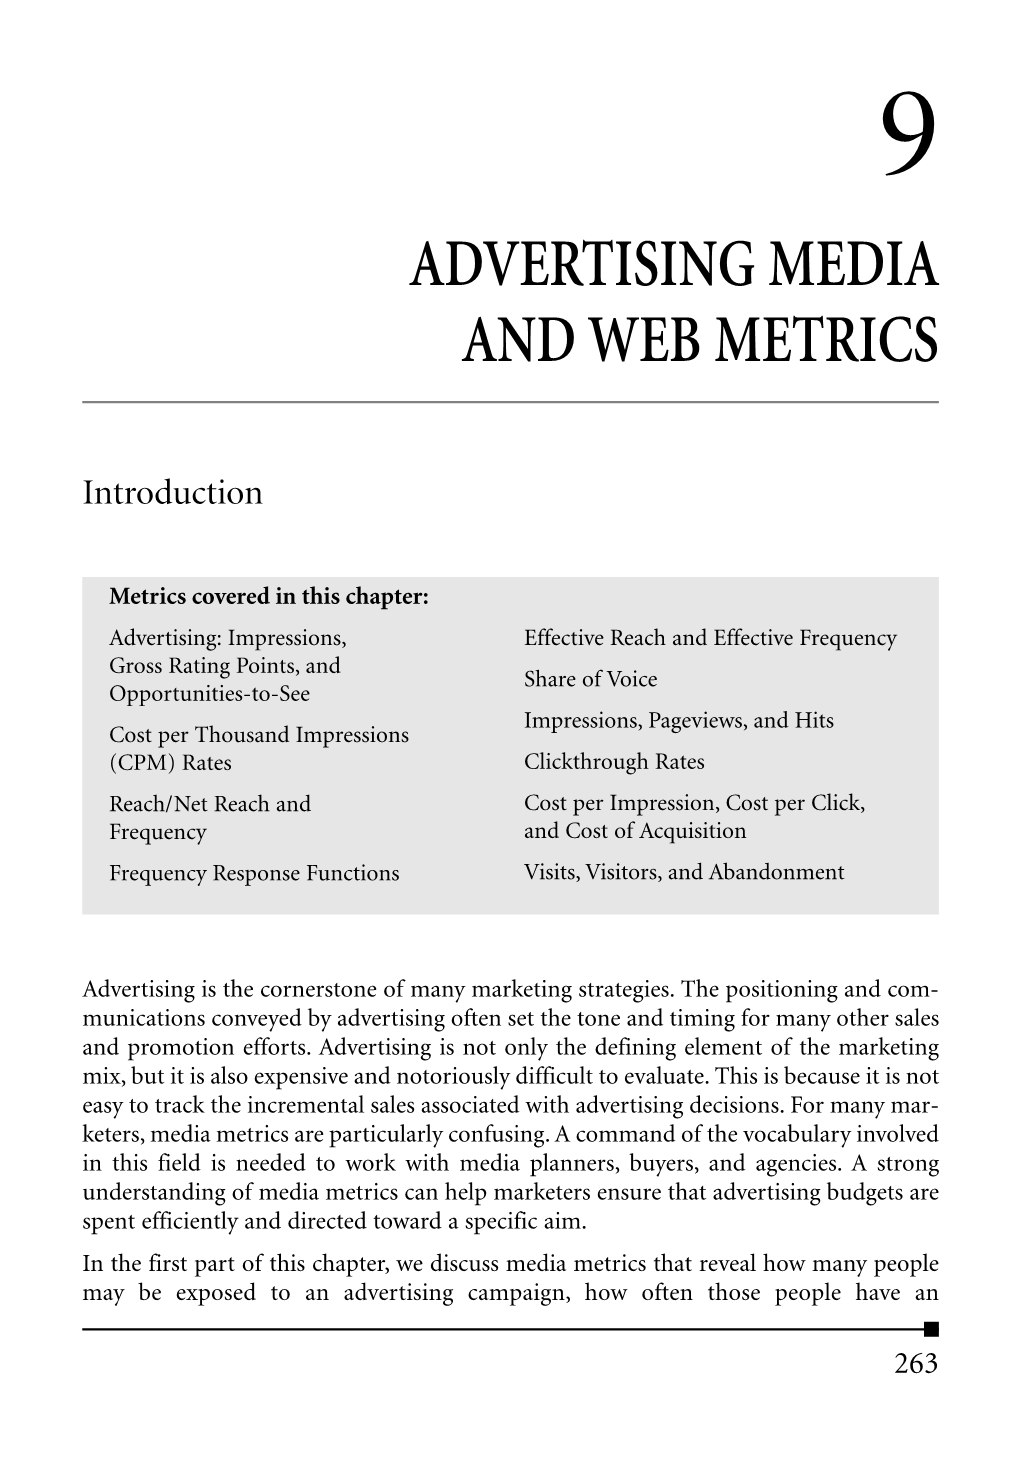 Advertising Media and Web Metrics